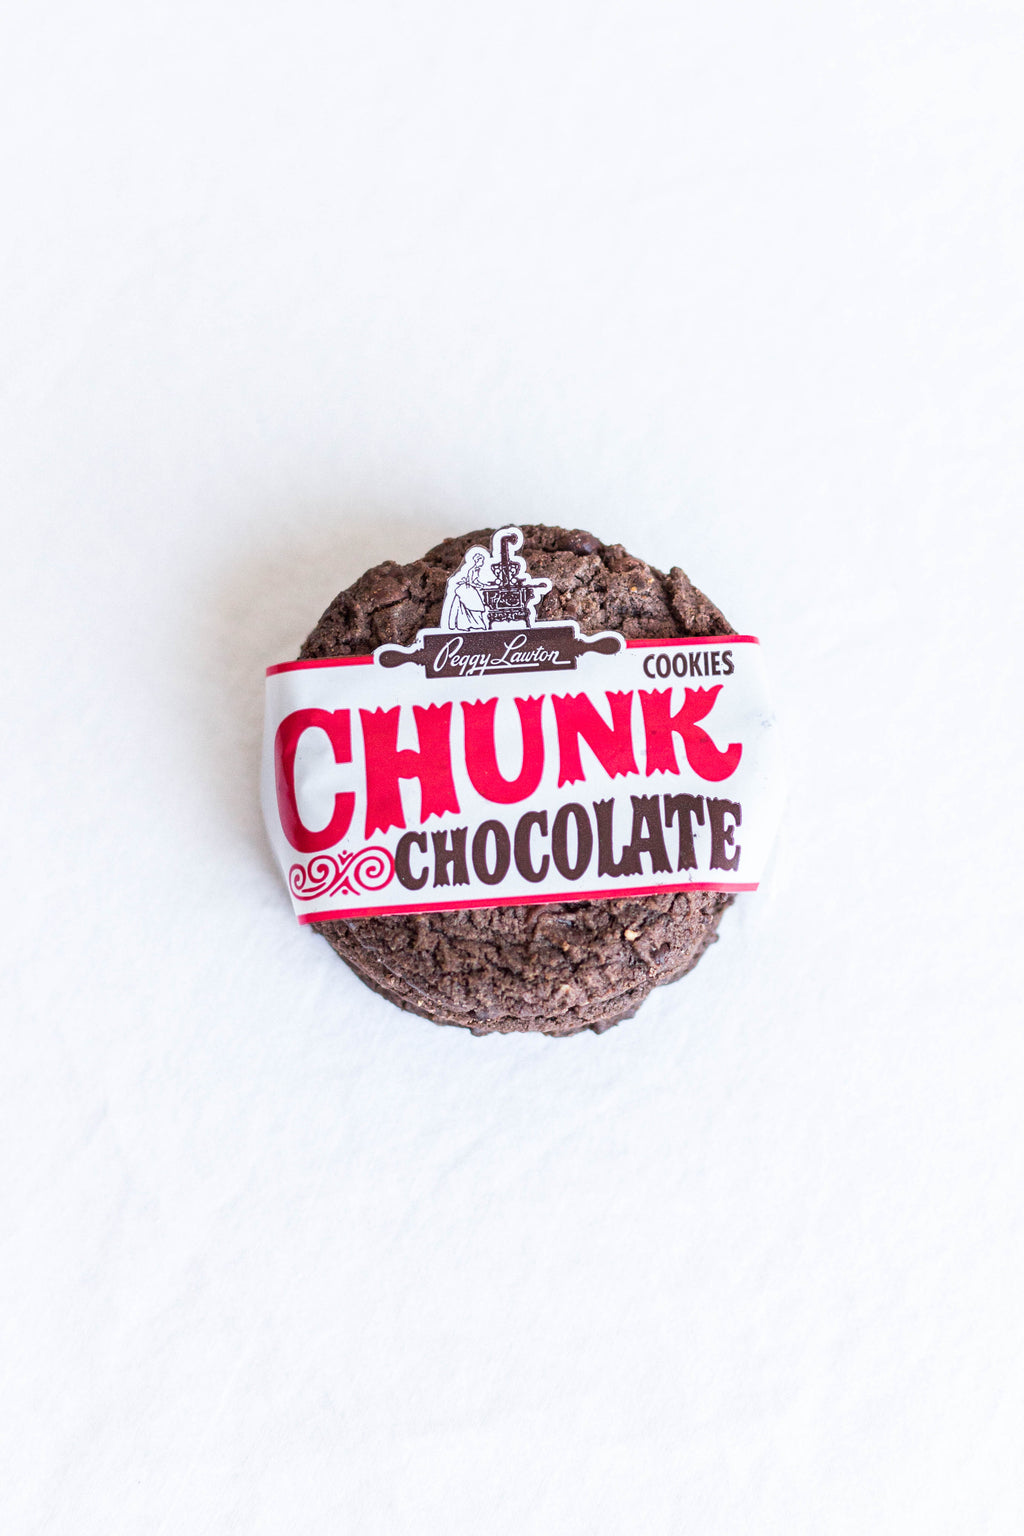 Peggy Lawton Chunk Chocolate Cookies